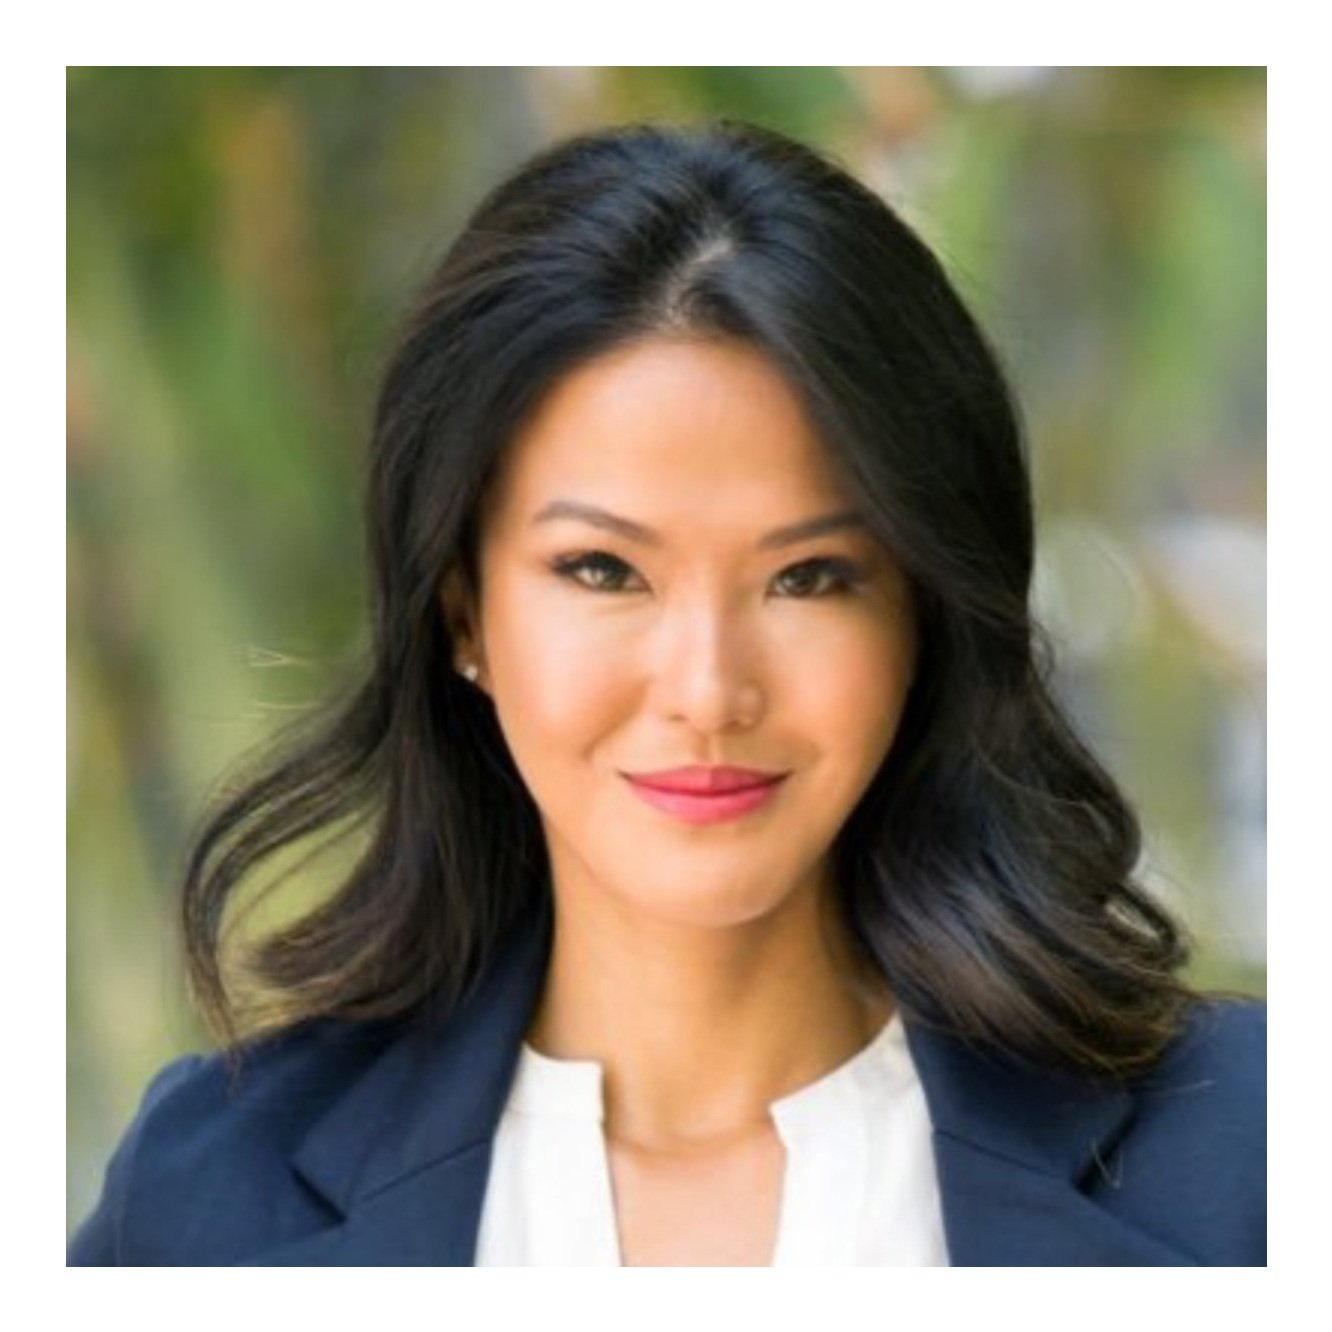 Melissa Chen, Director of the Board